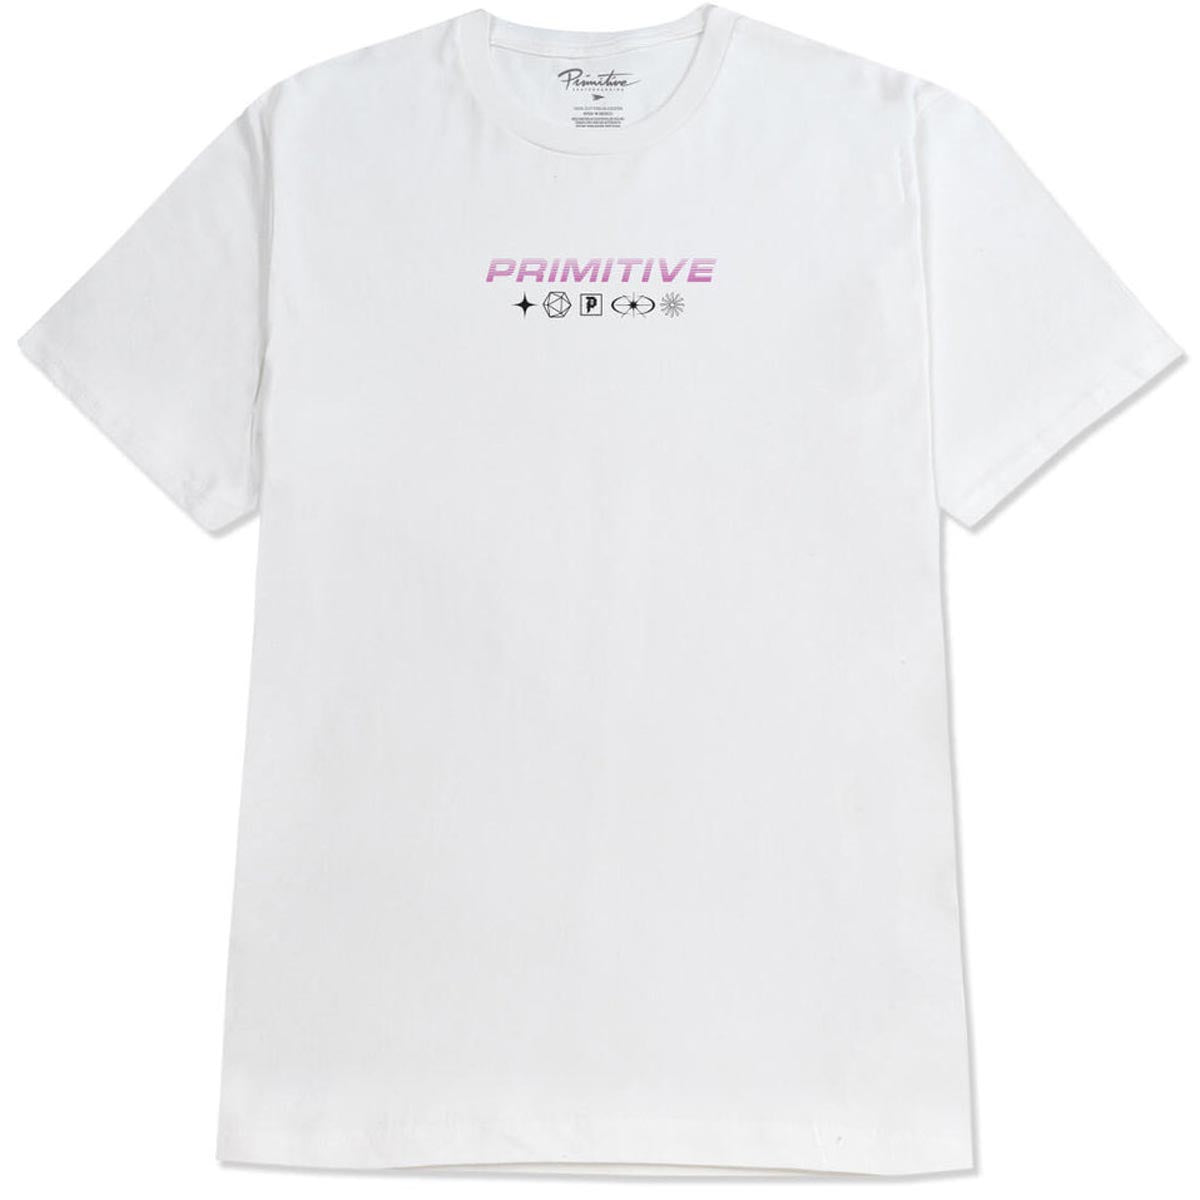 Primitive Zenith T-Shirt - White image 2